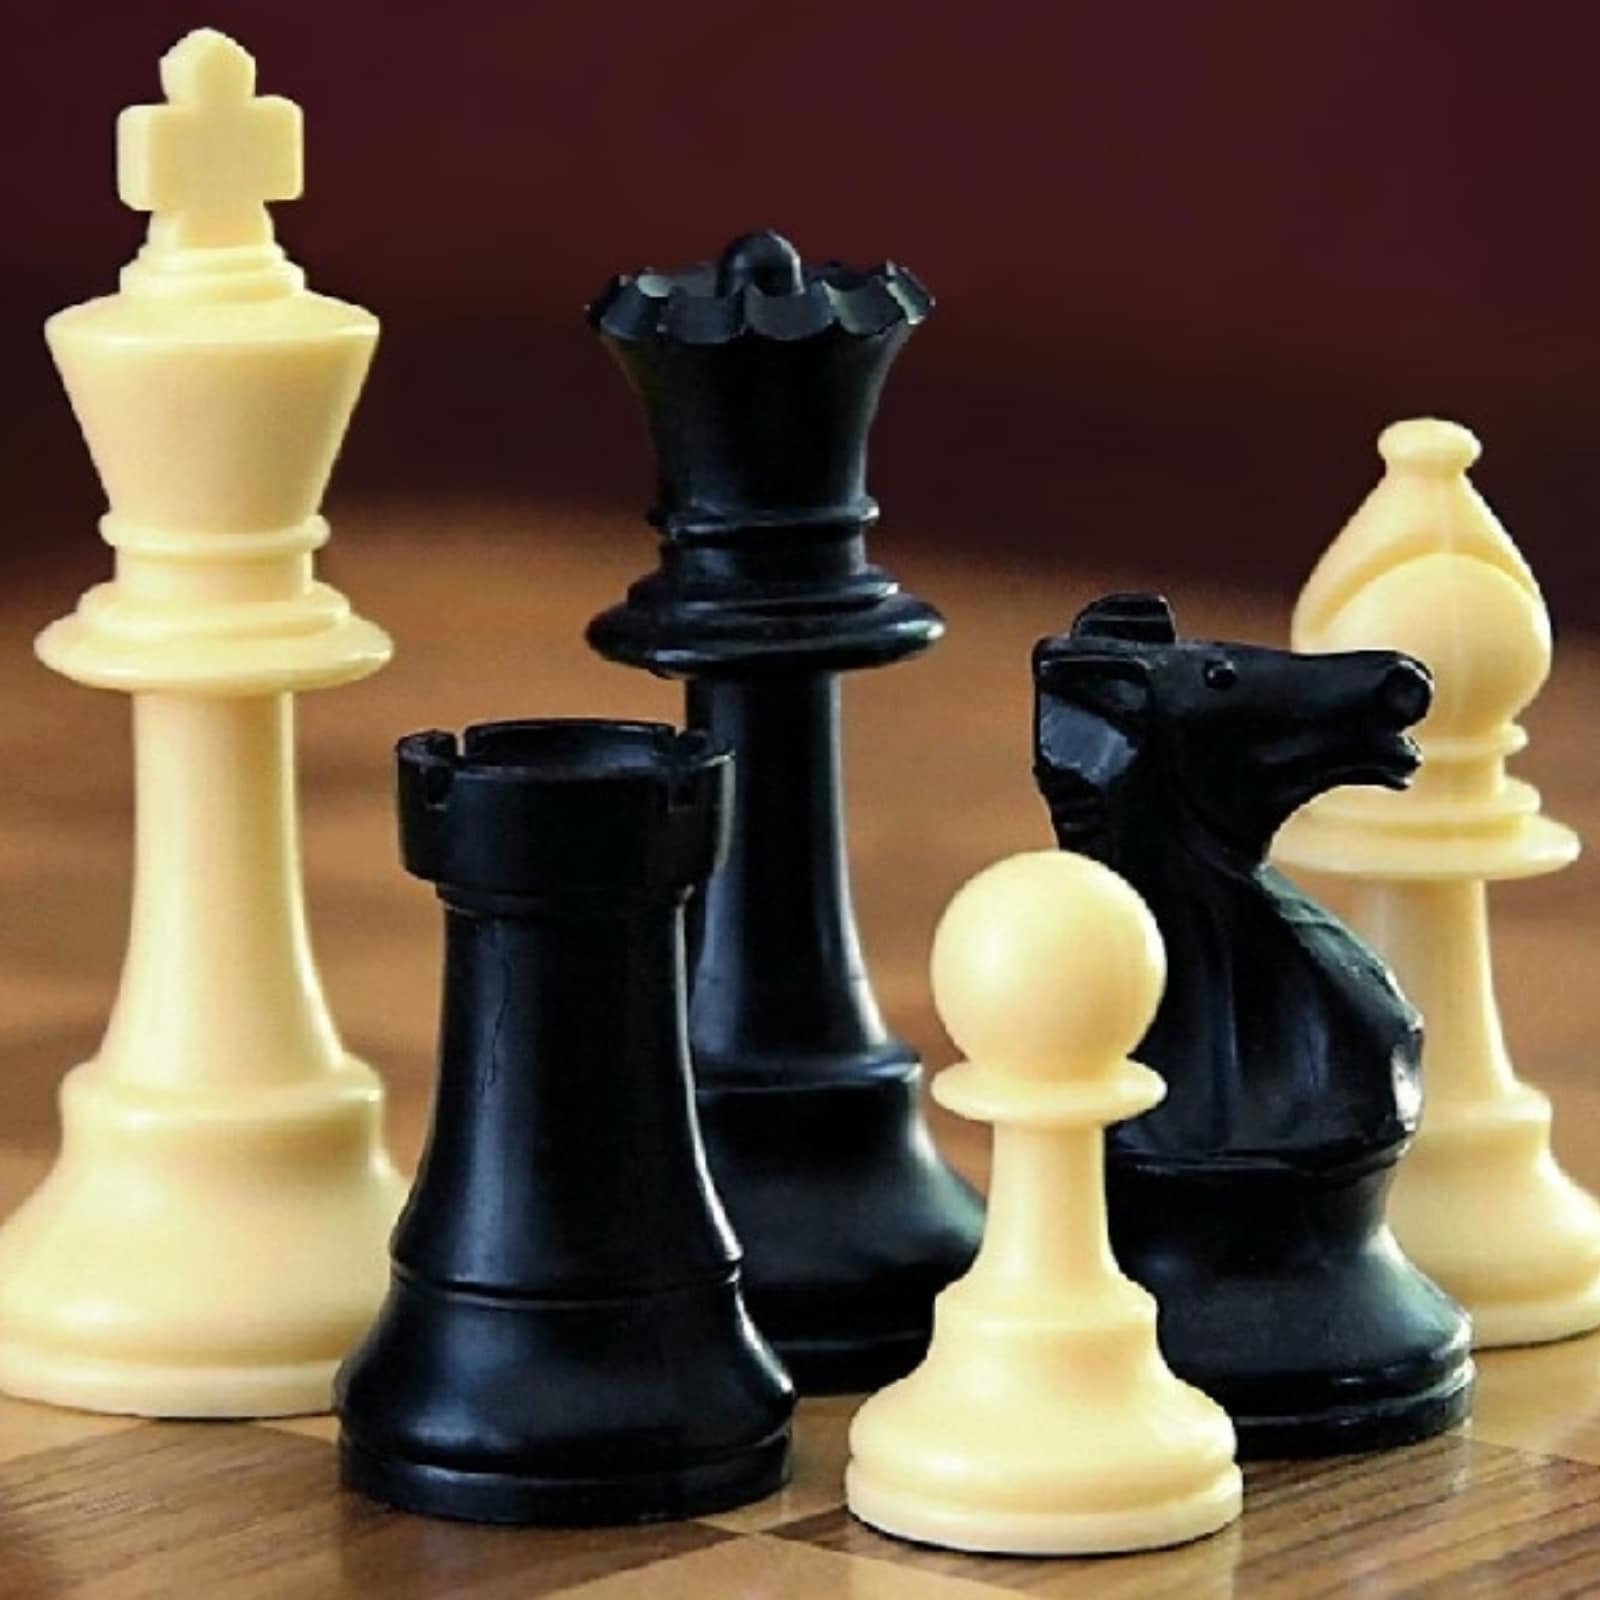 Grand Swiss: Firouzja, Caruana qualify for 2022 Candidates Tournament of  chess